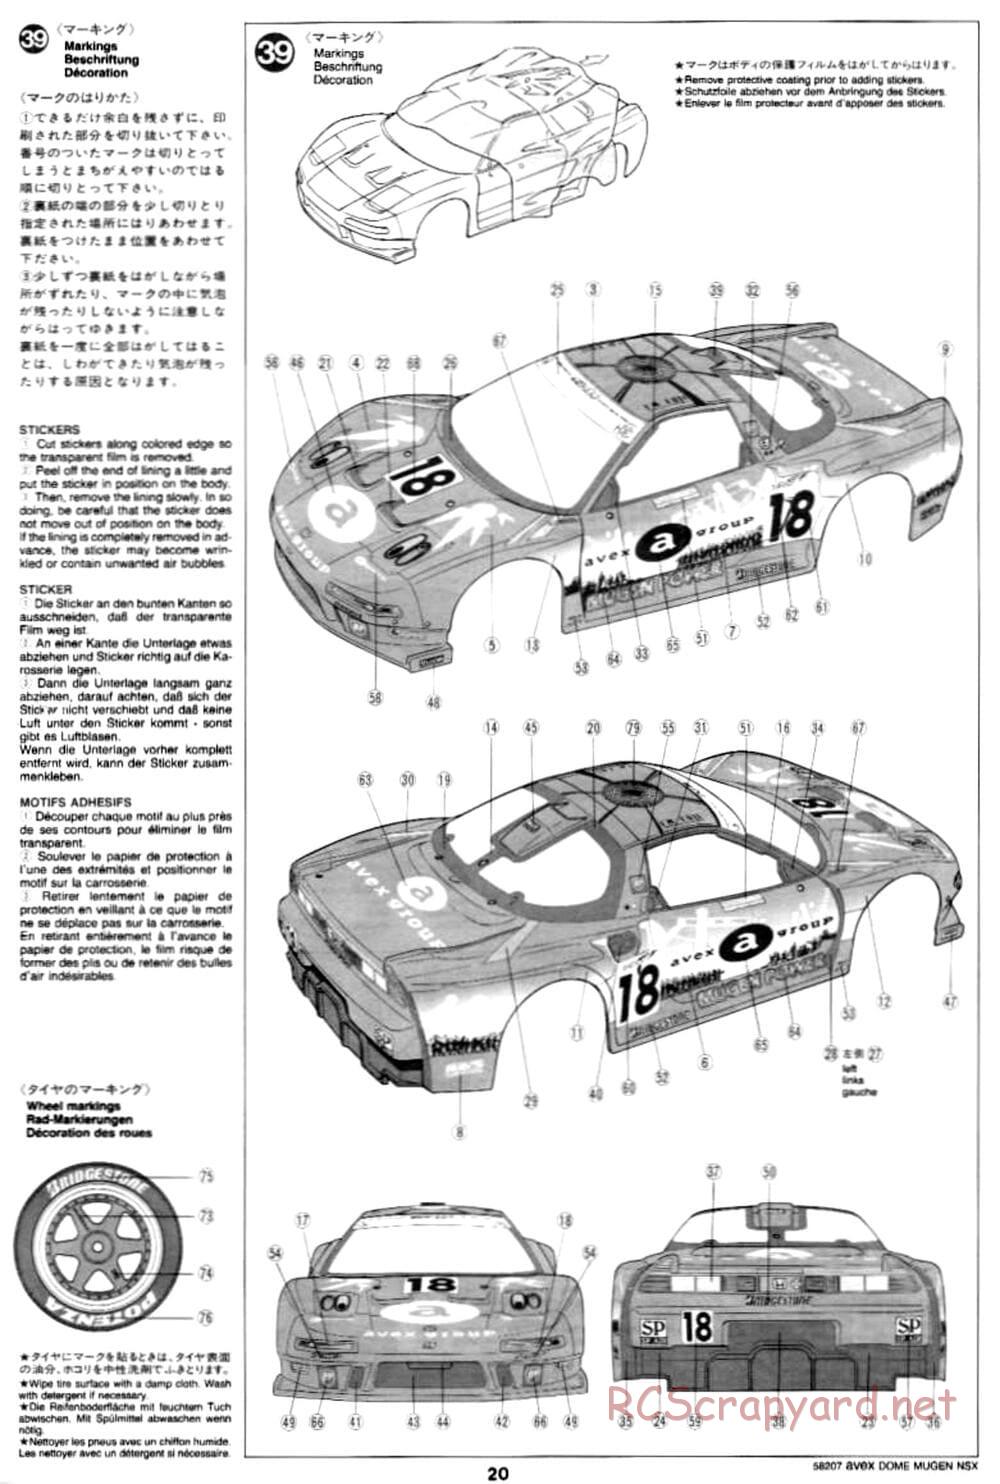 Tamiya - Avex Dome Mugen NSX - TA-03R Chassis - Manual - Page 20